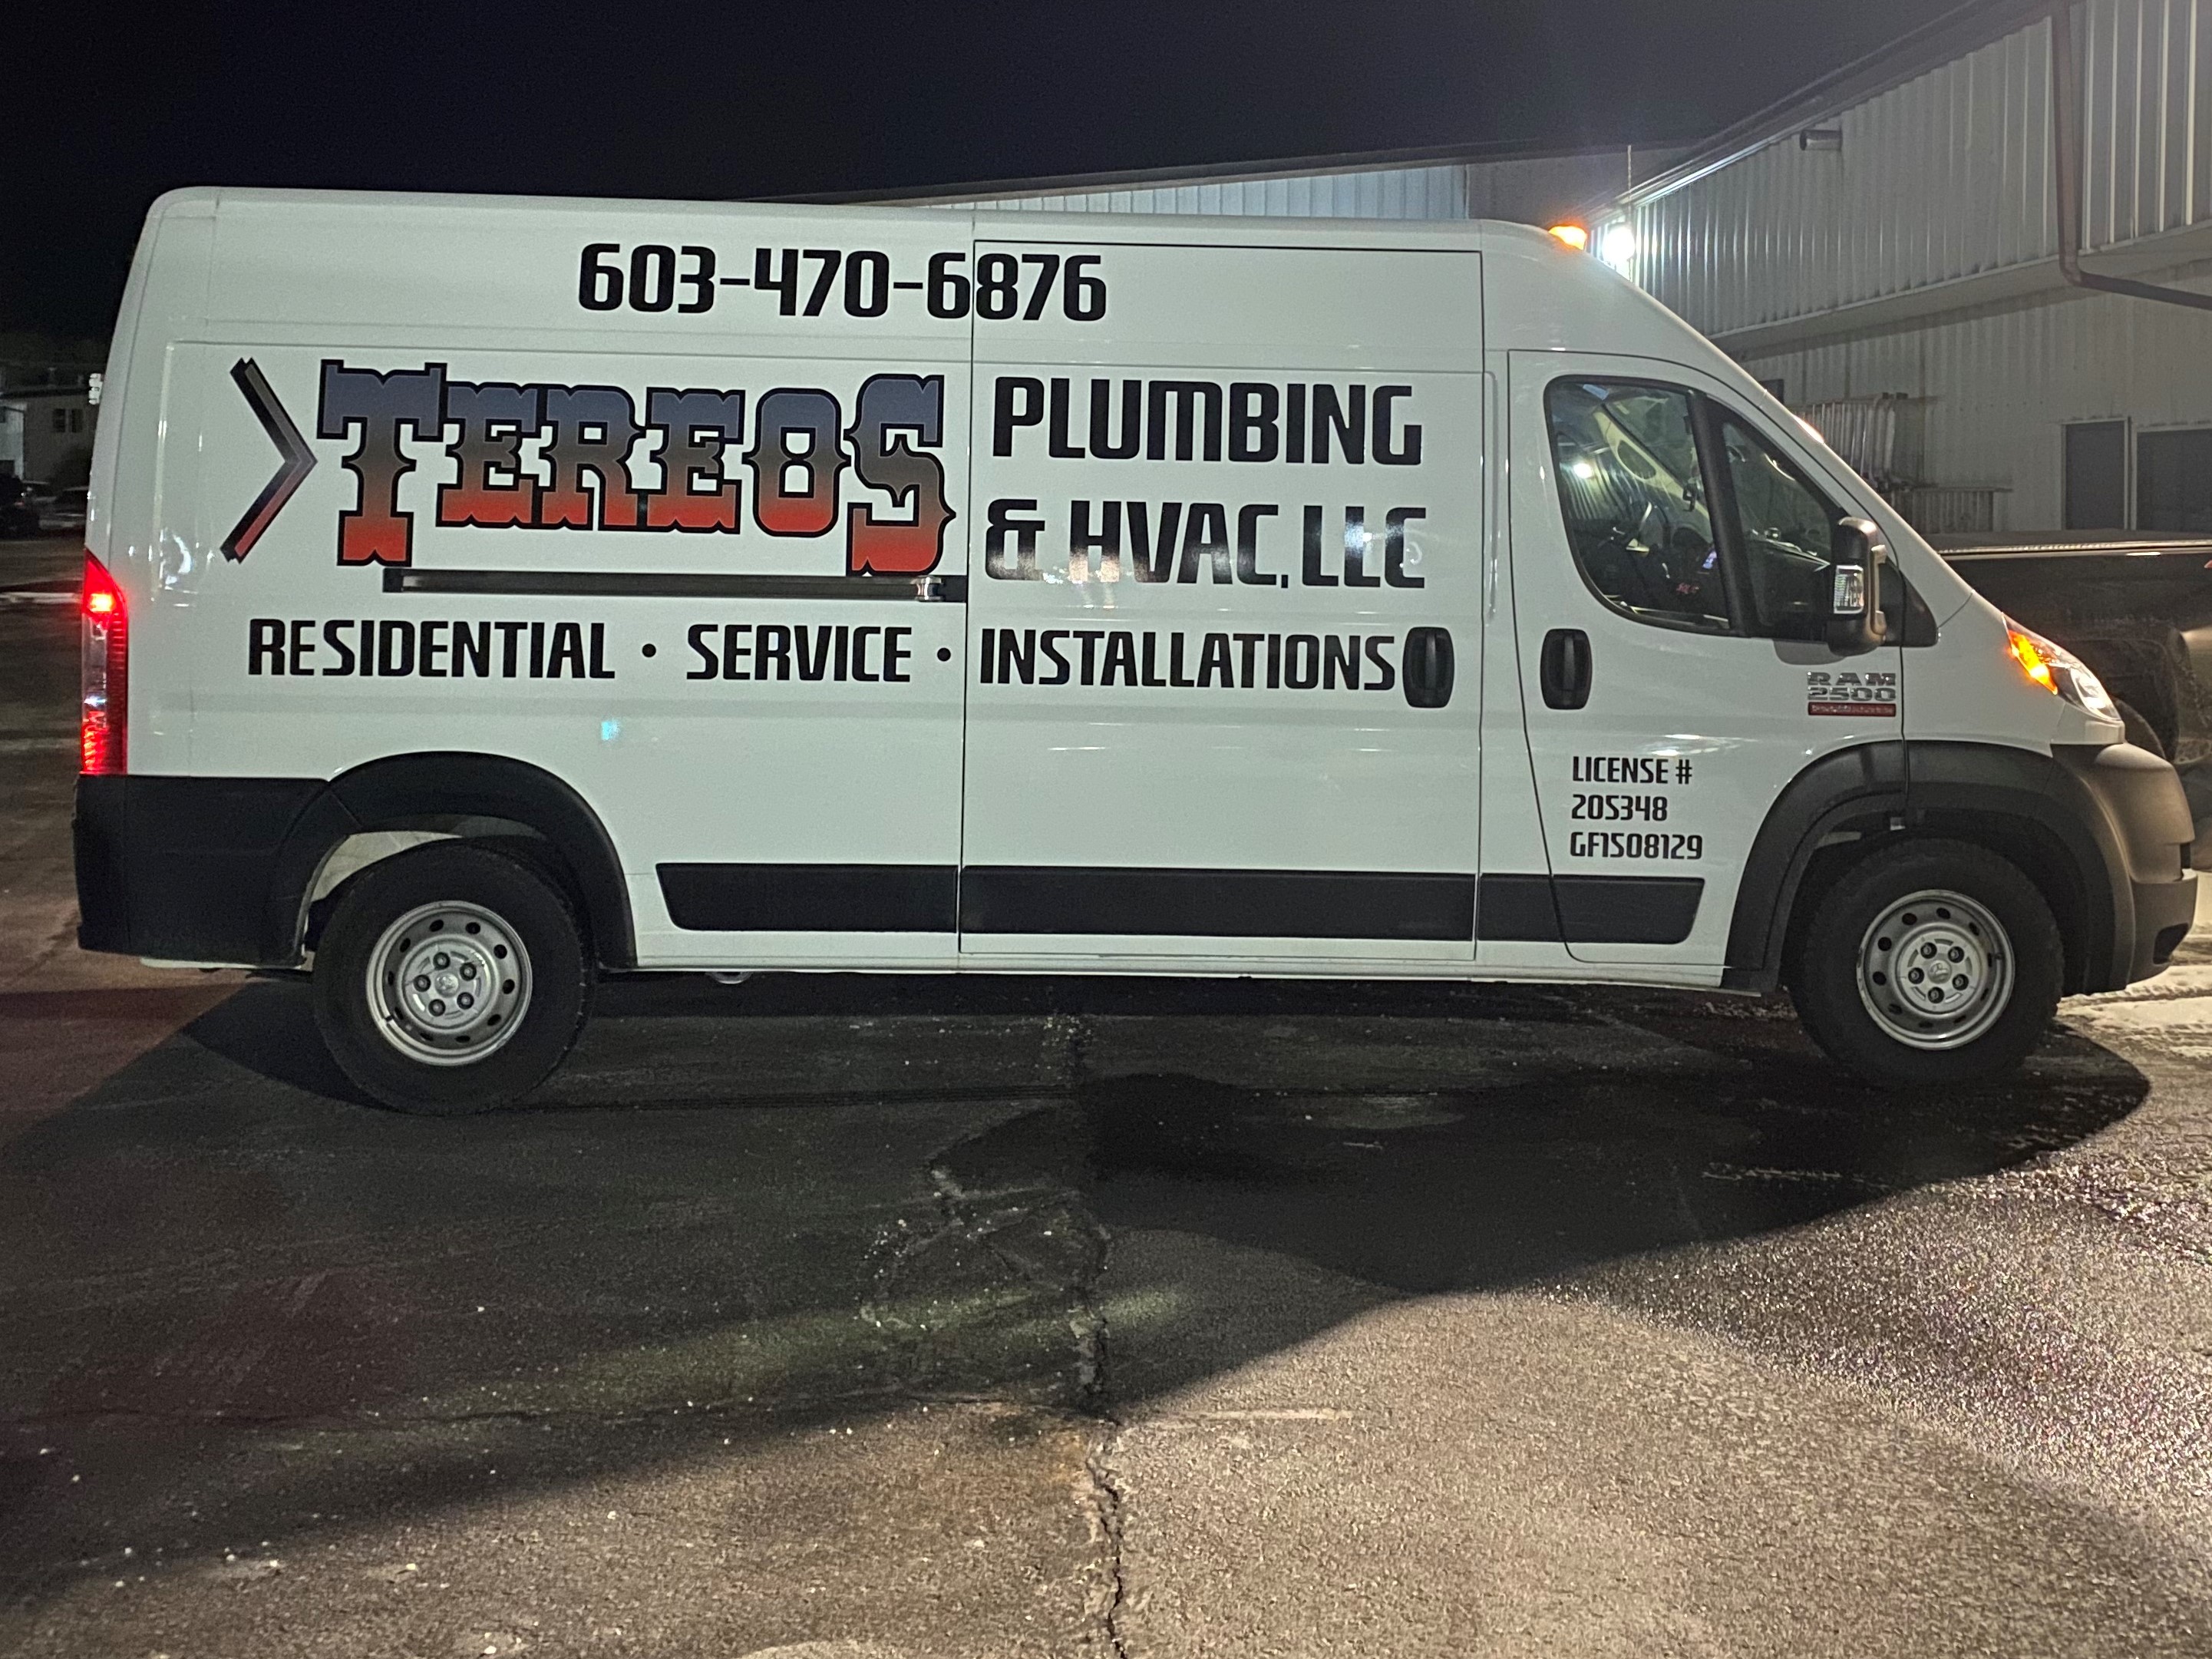 Tereos Plumbing and HVAC, LLC Logo